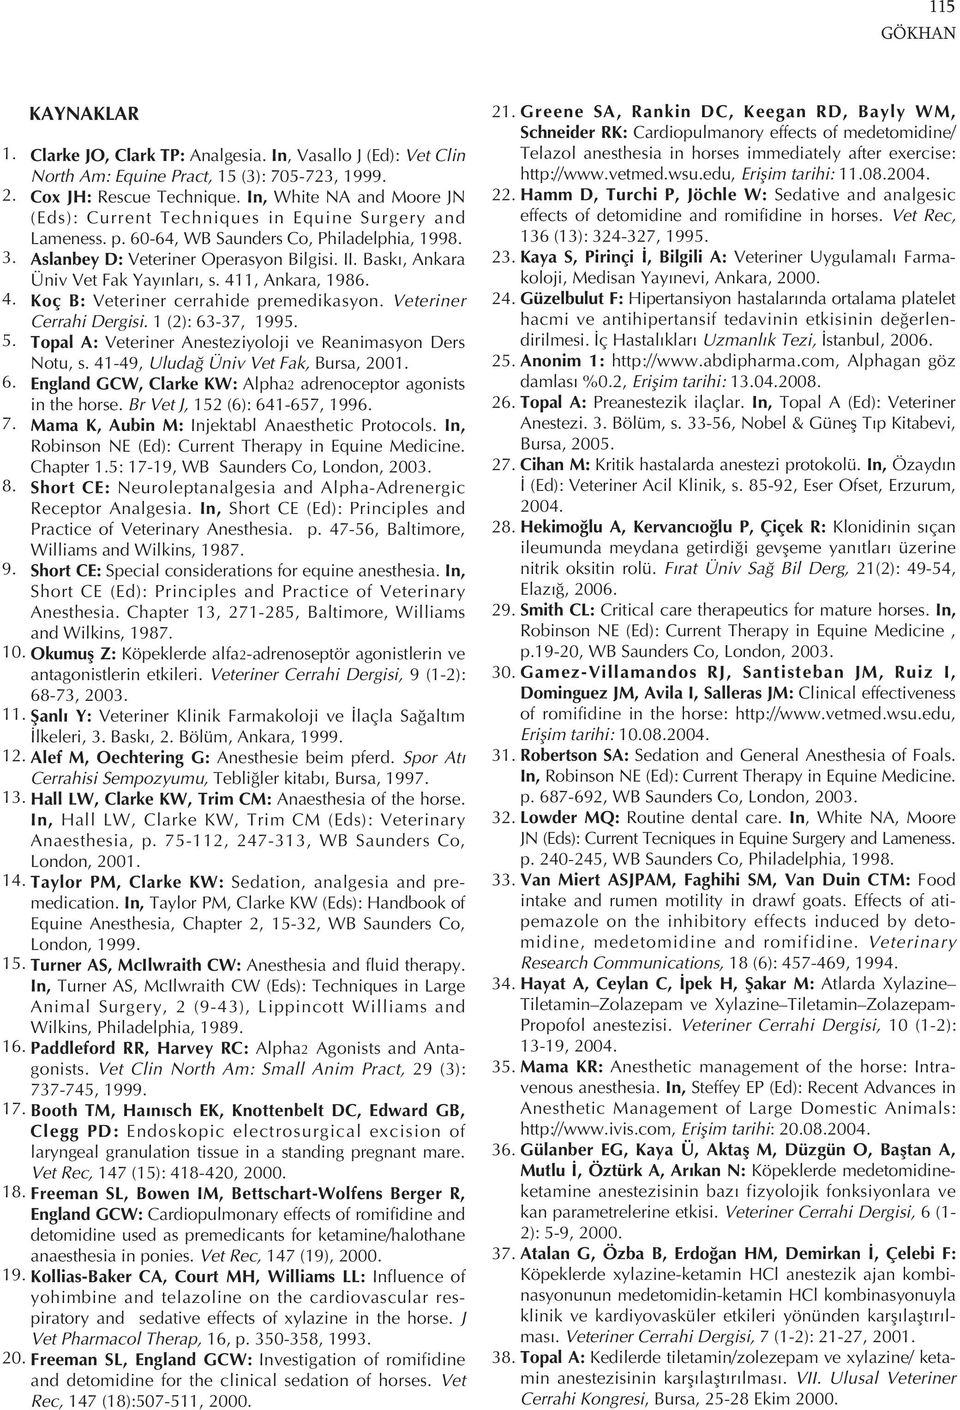 Bask, Ankara Üniv Vet Fak Yay nlar, s. 411, Ankara, 1986. 4. Koç B: Veteriner cerrahide premedikasyon. Veteriner Cerrahi Dergisi. 1 (2): 63-37, 1995. 5.